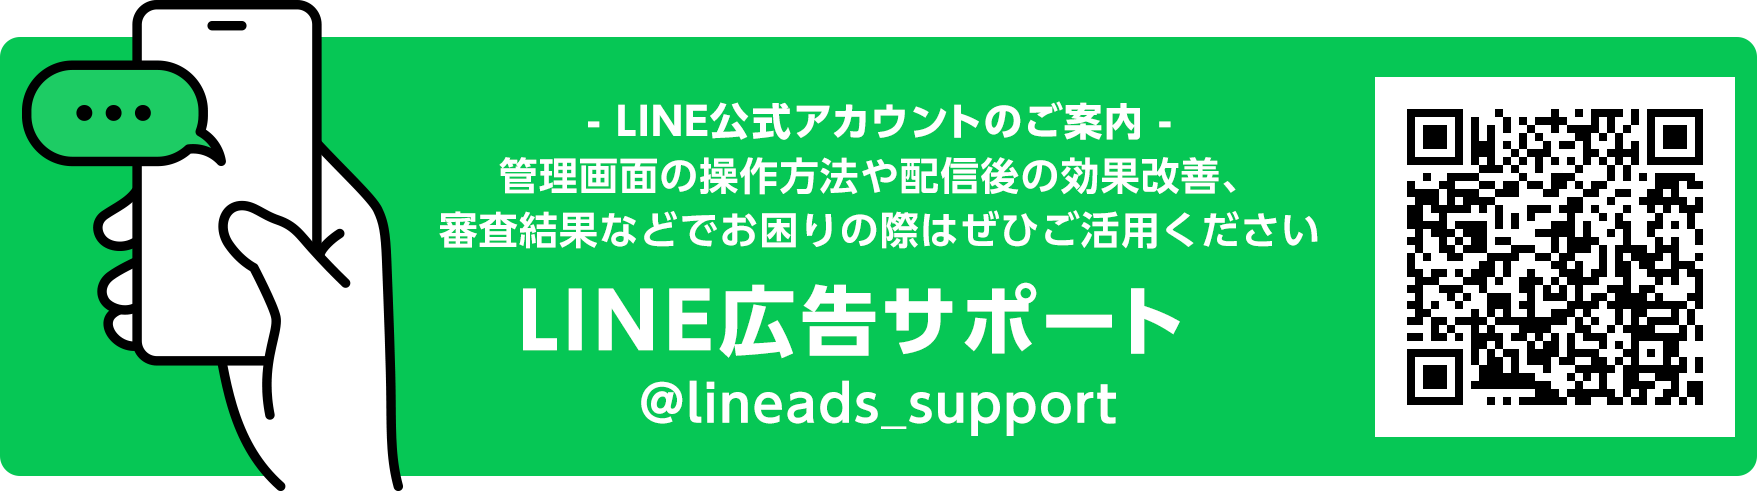 Line広告 Line Ads Line公式アカウント Line広告サポート を使うマニュアル Line For Business